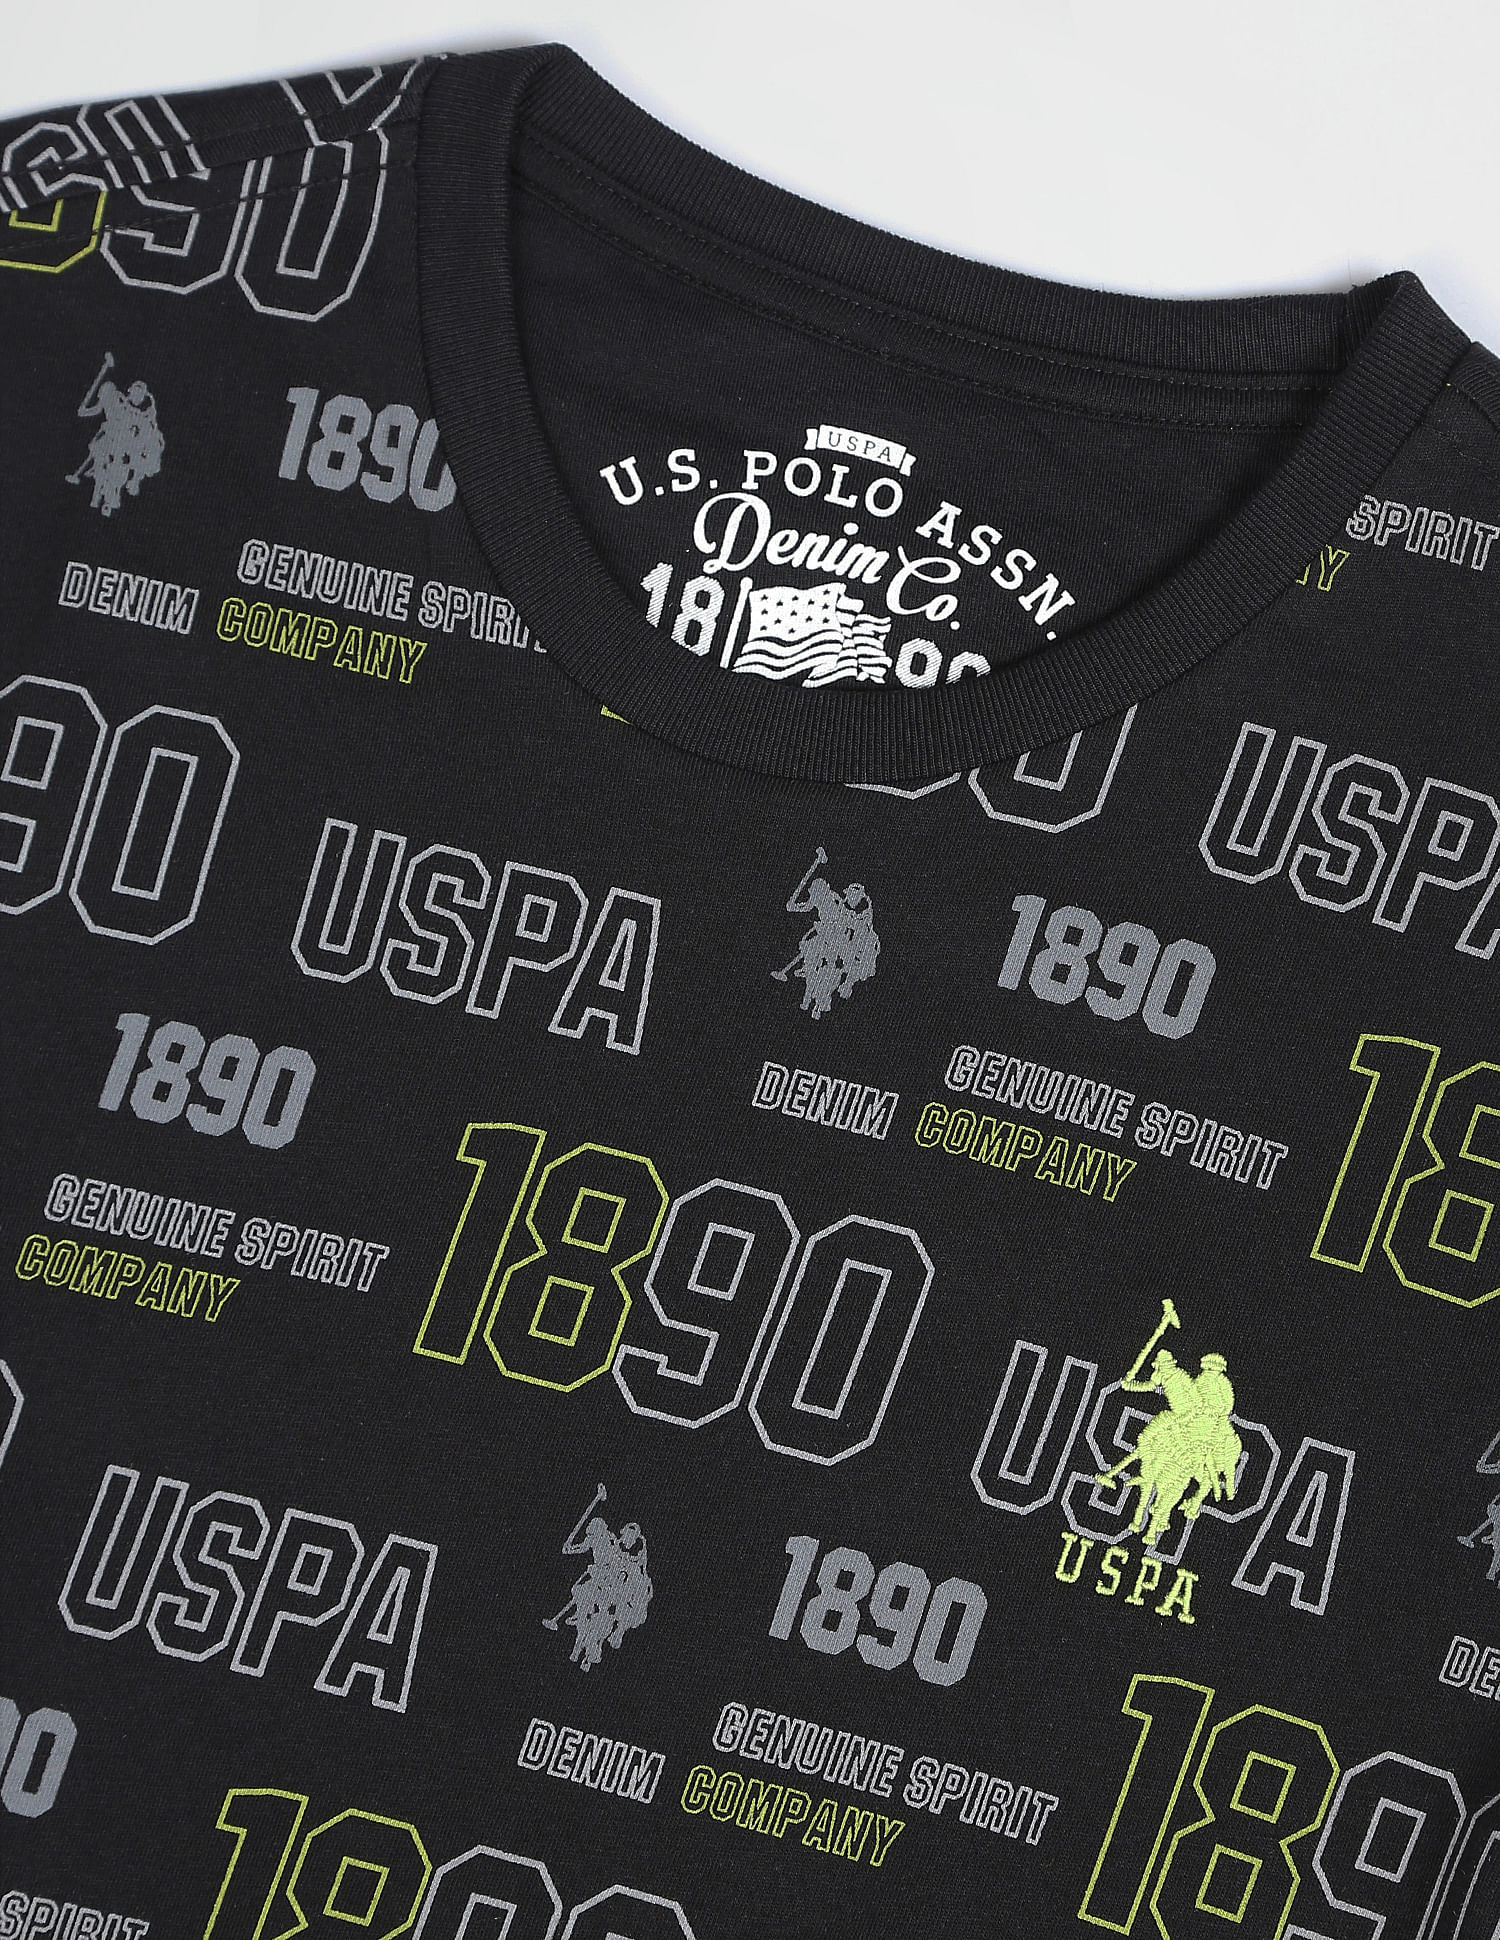 Buy U.S. Polo Assn. Denim Co. Iconic All Over Brand Print T-Shirt - NNNOW .com